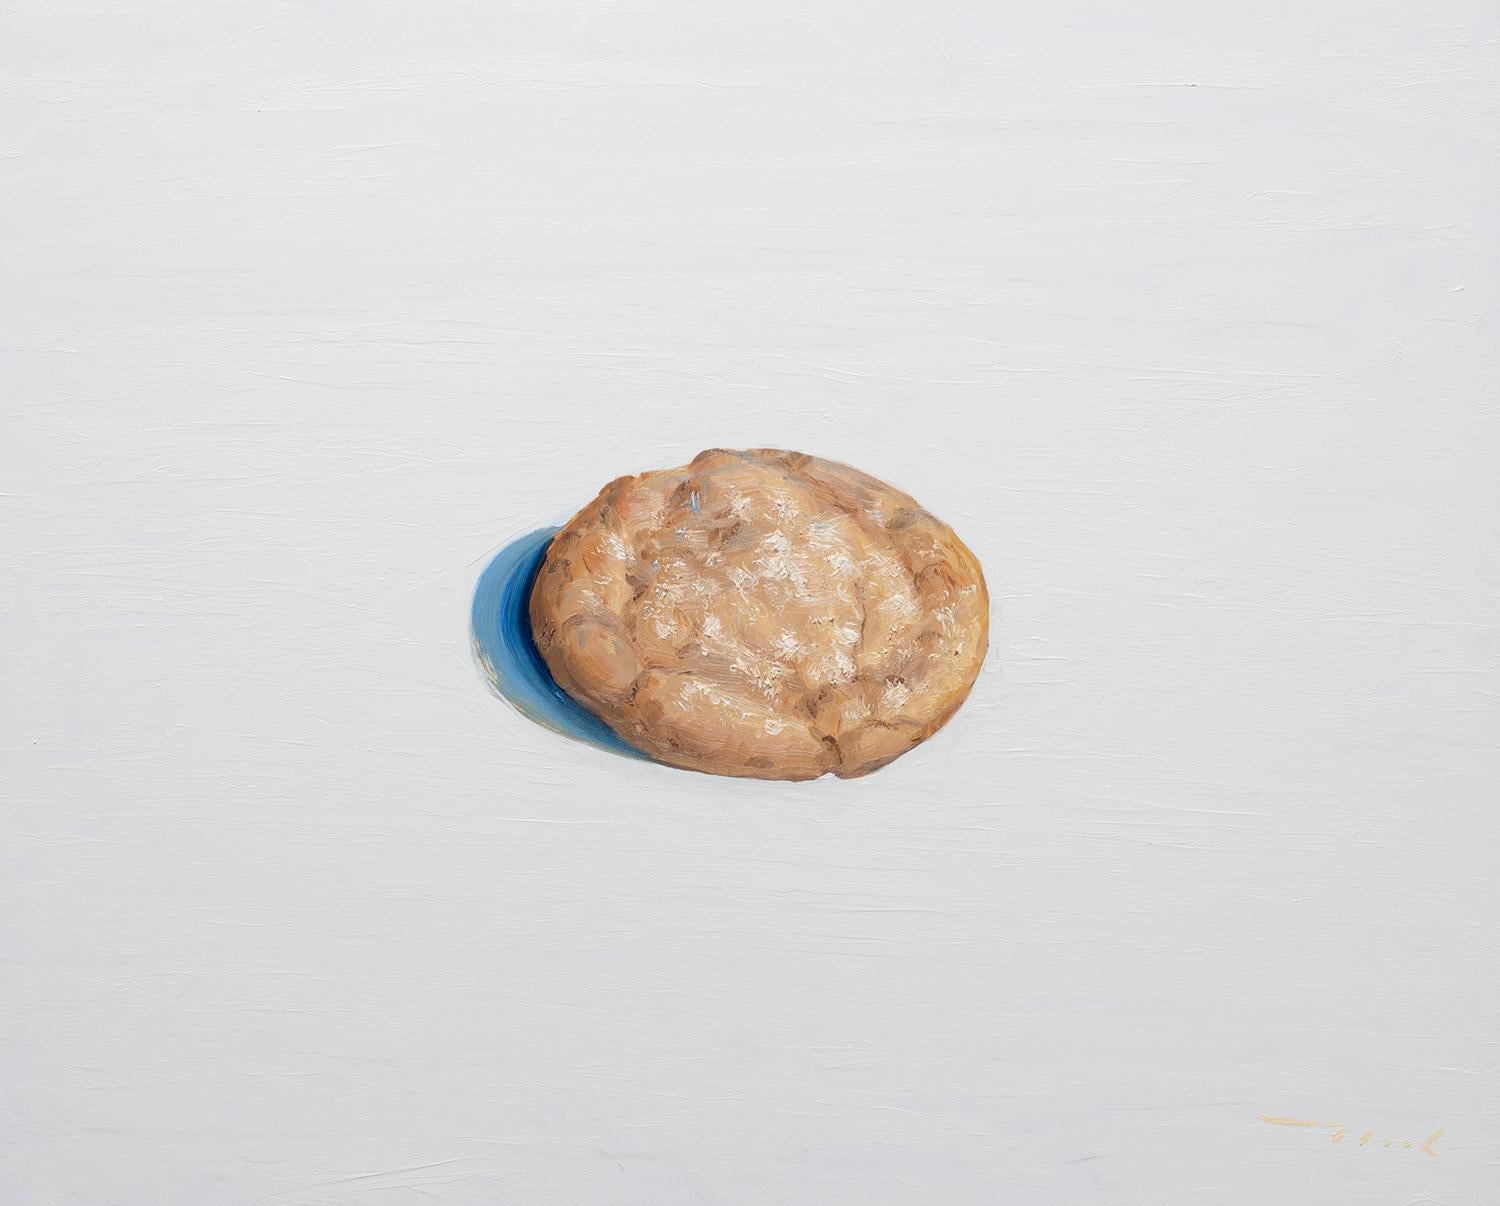 Powdered Cookie, Oil Painting - Art by McGarren Flack